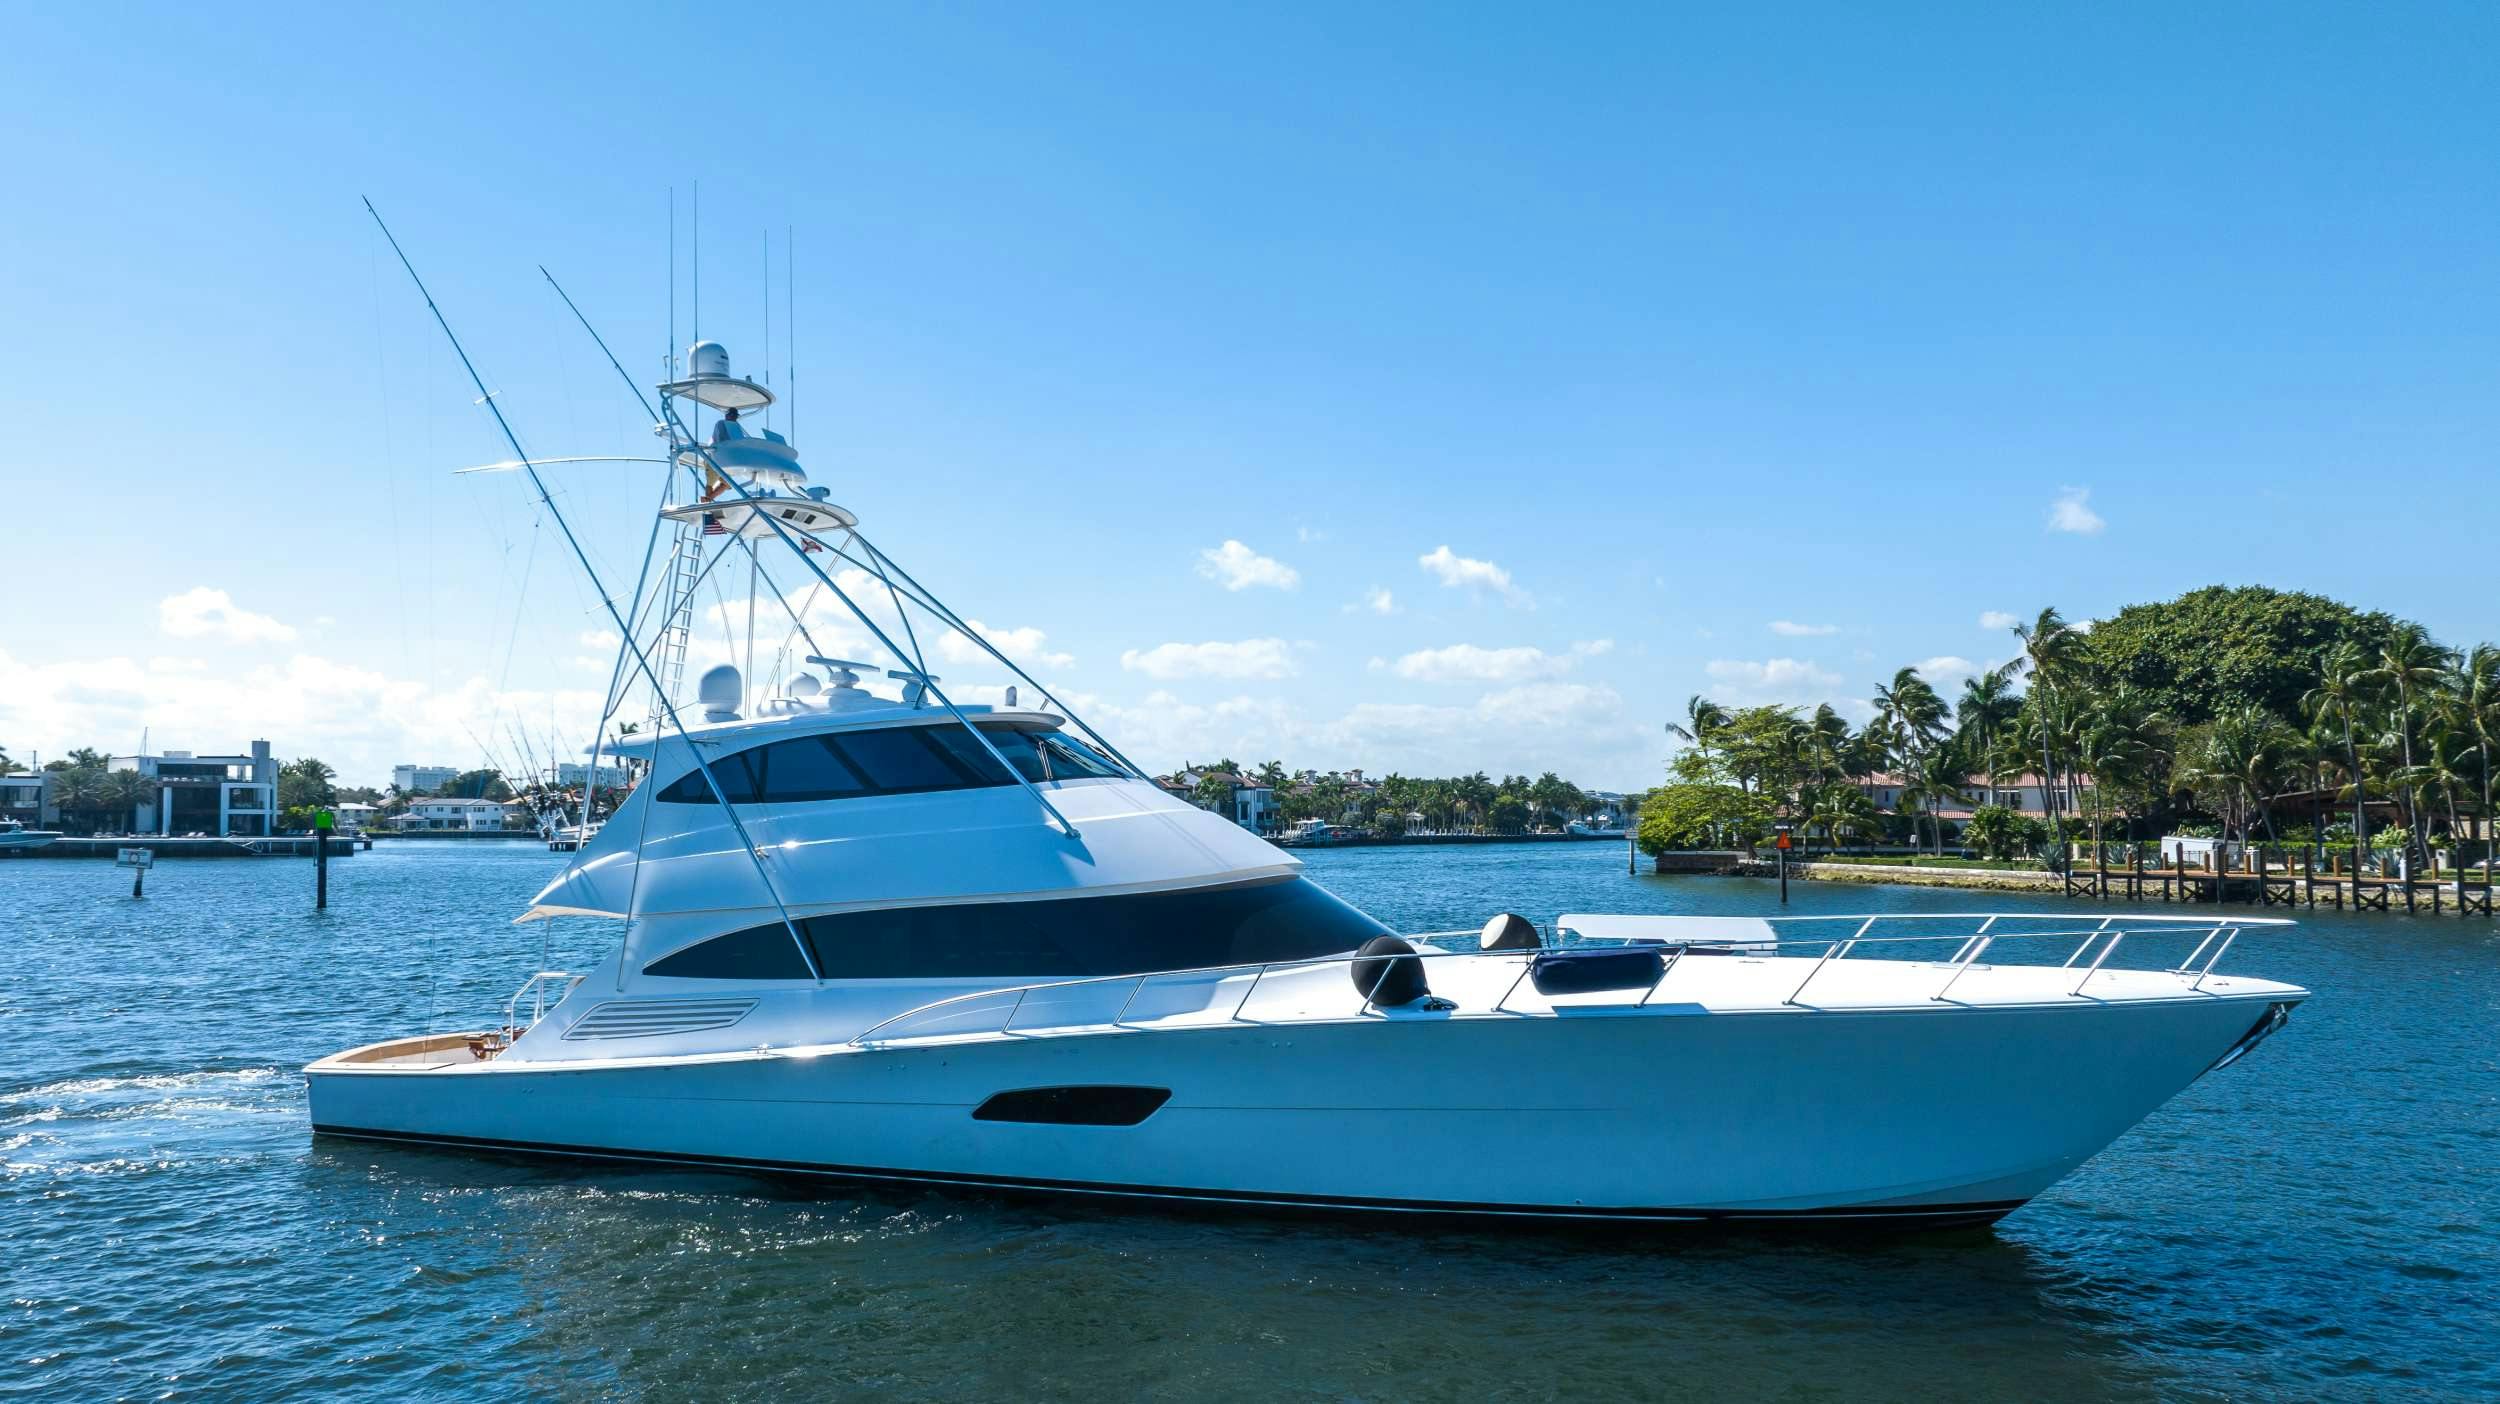 Astrikos - Motor Boat Charter USA & Boat hire in Florida & Bahamas 1